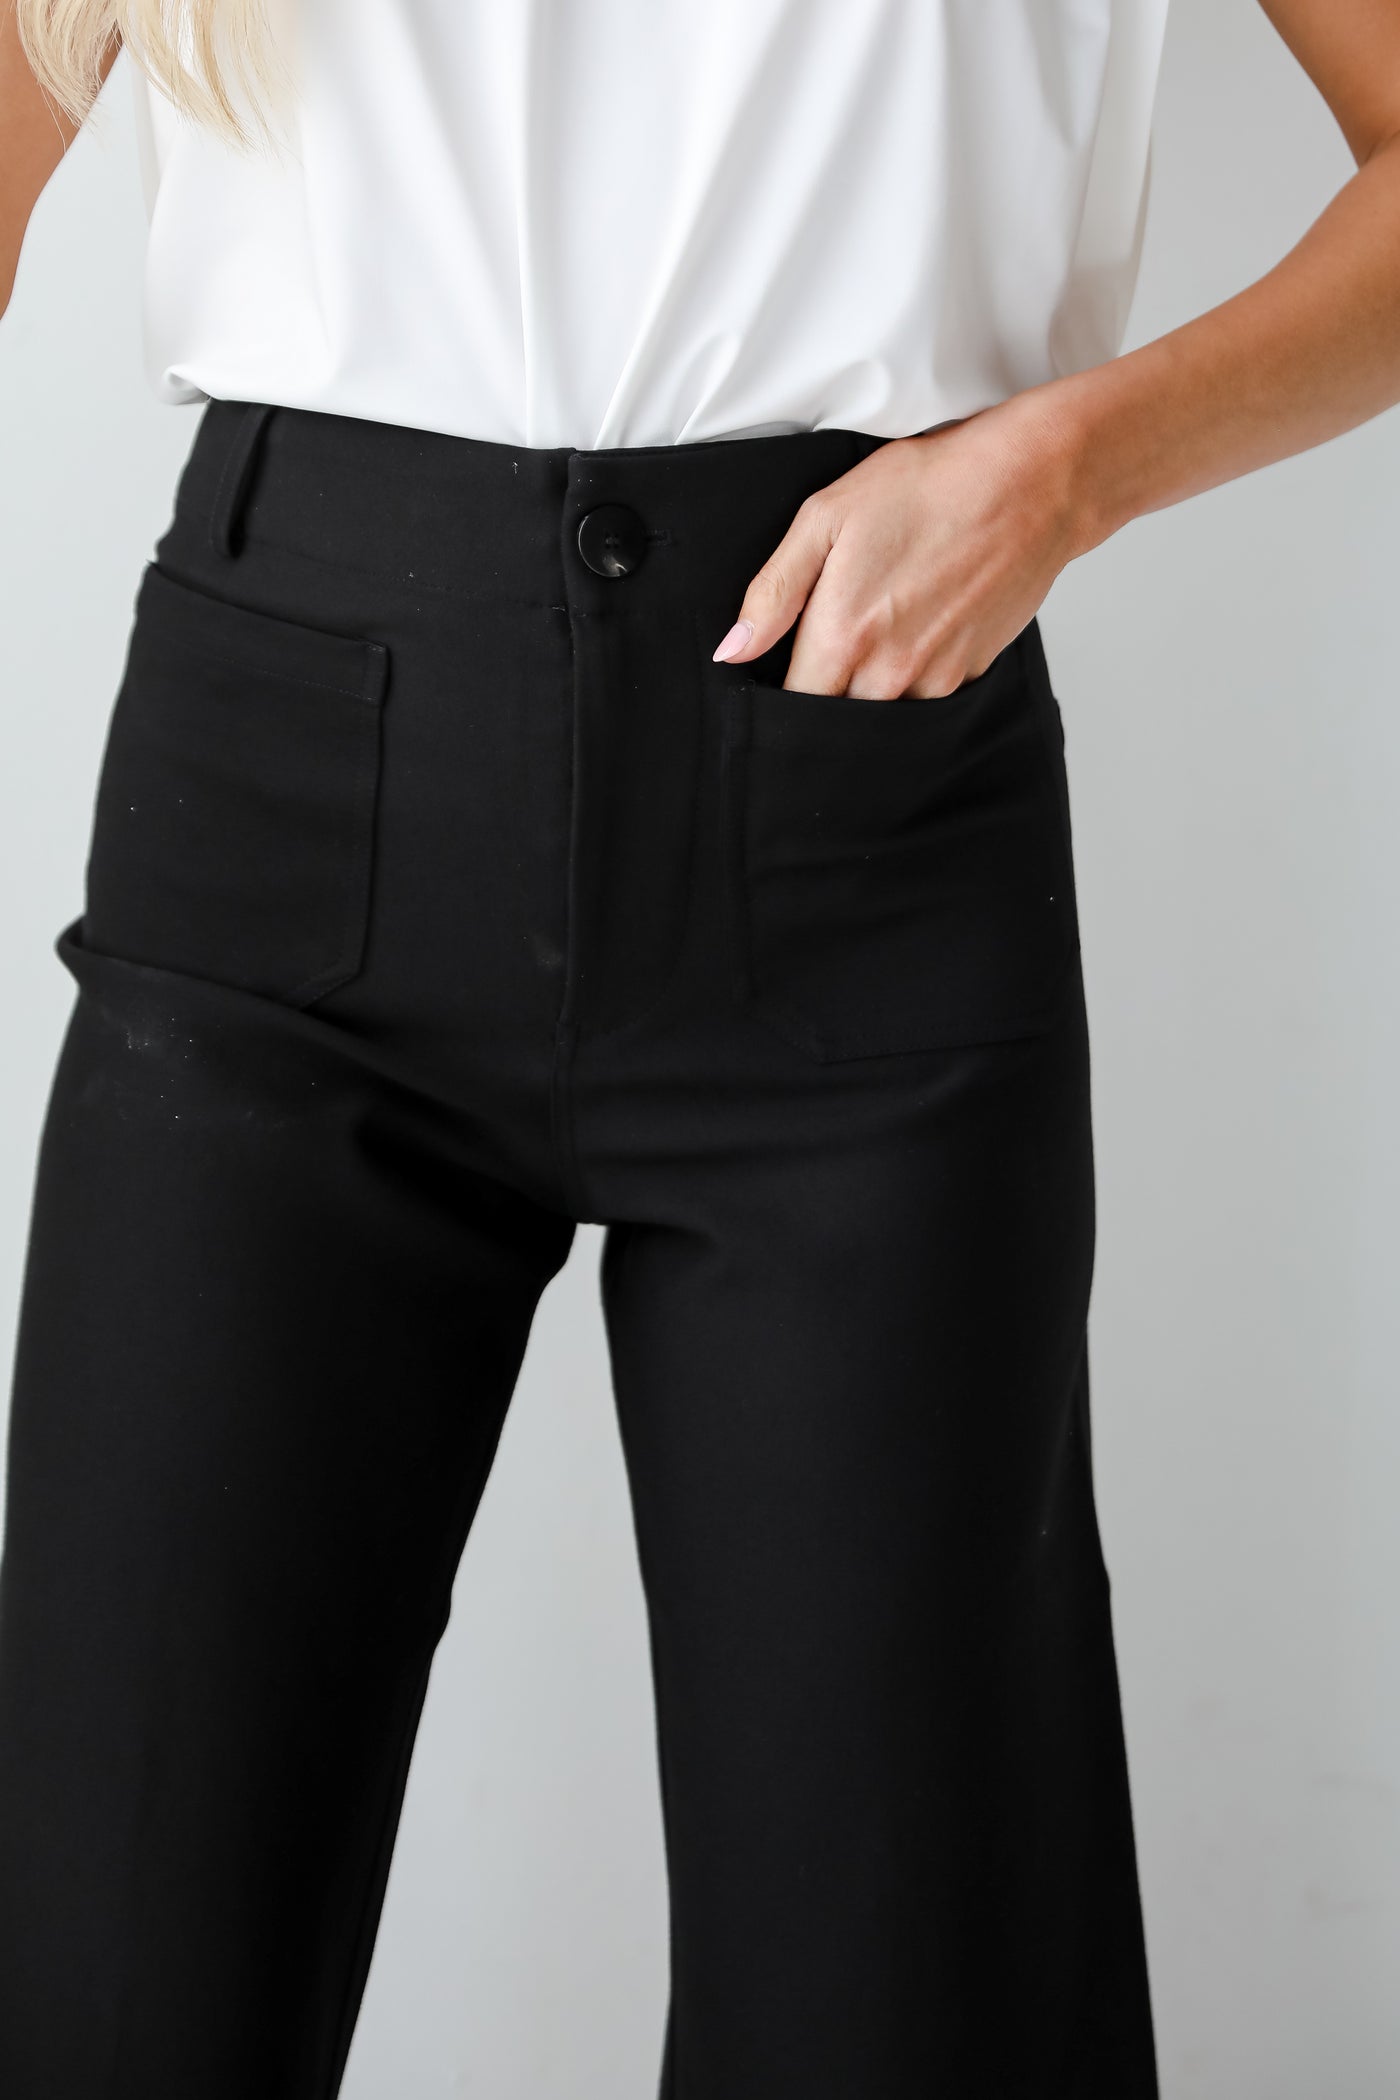 Black Trouser Pants for women. Spanxs Dupe